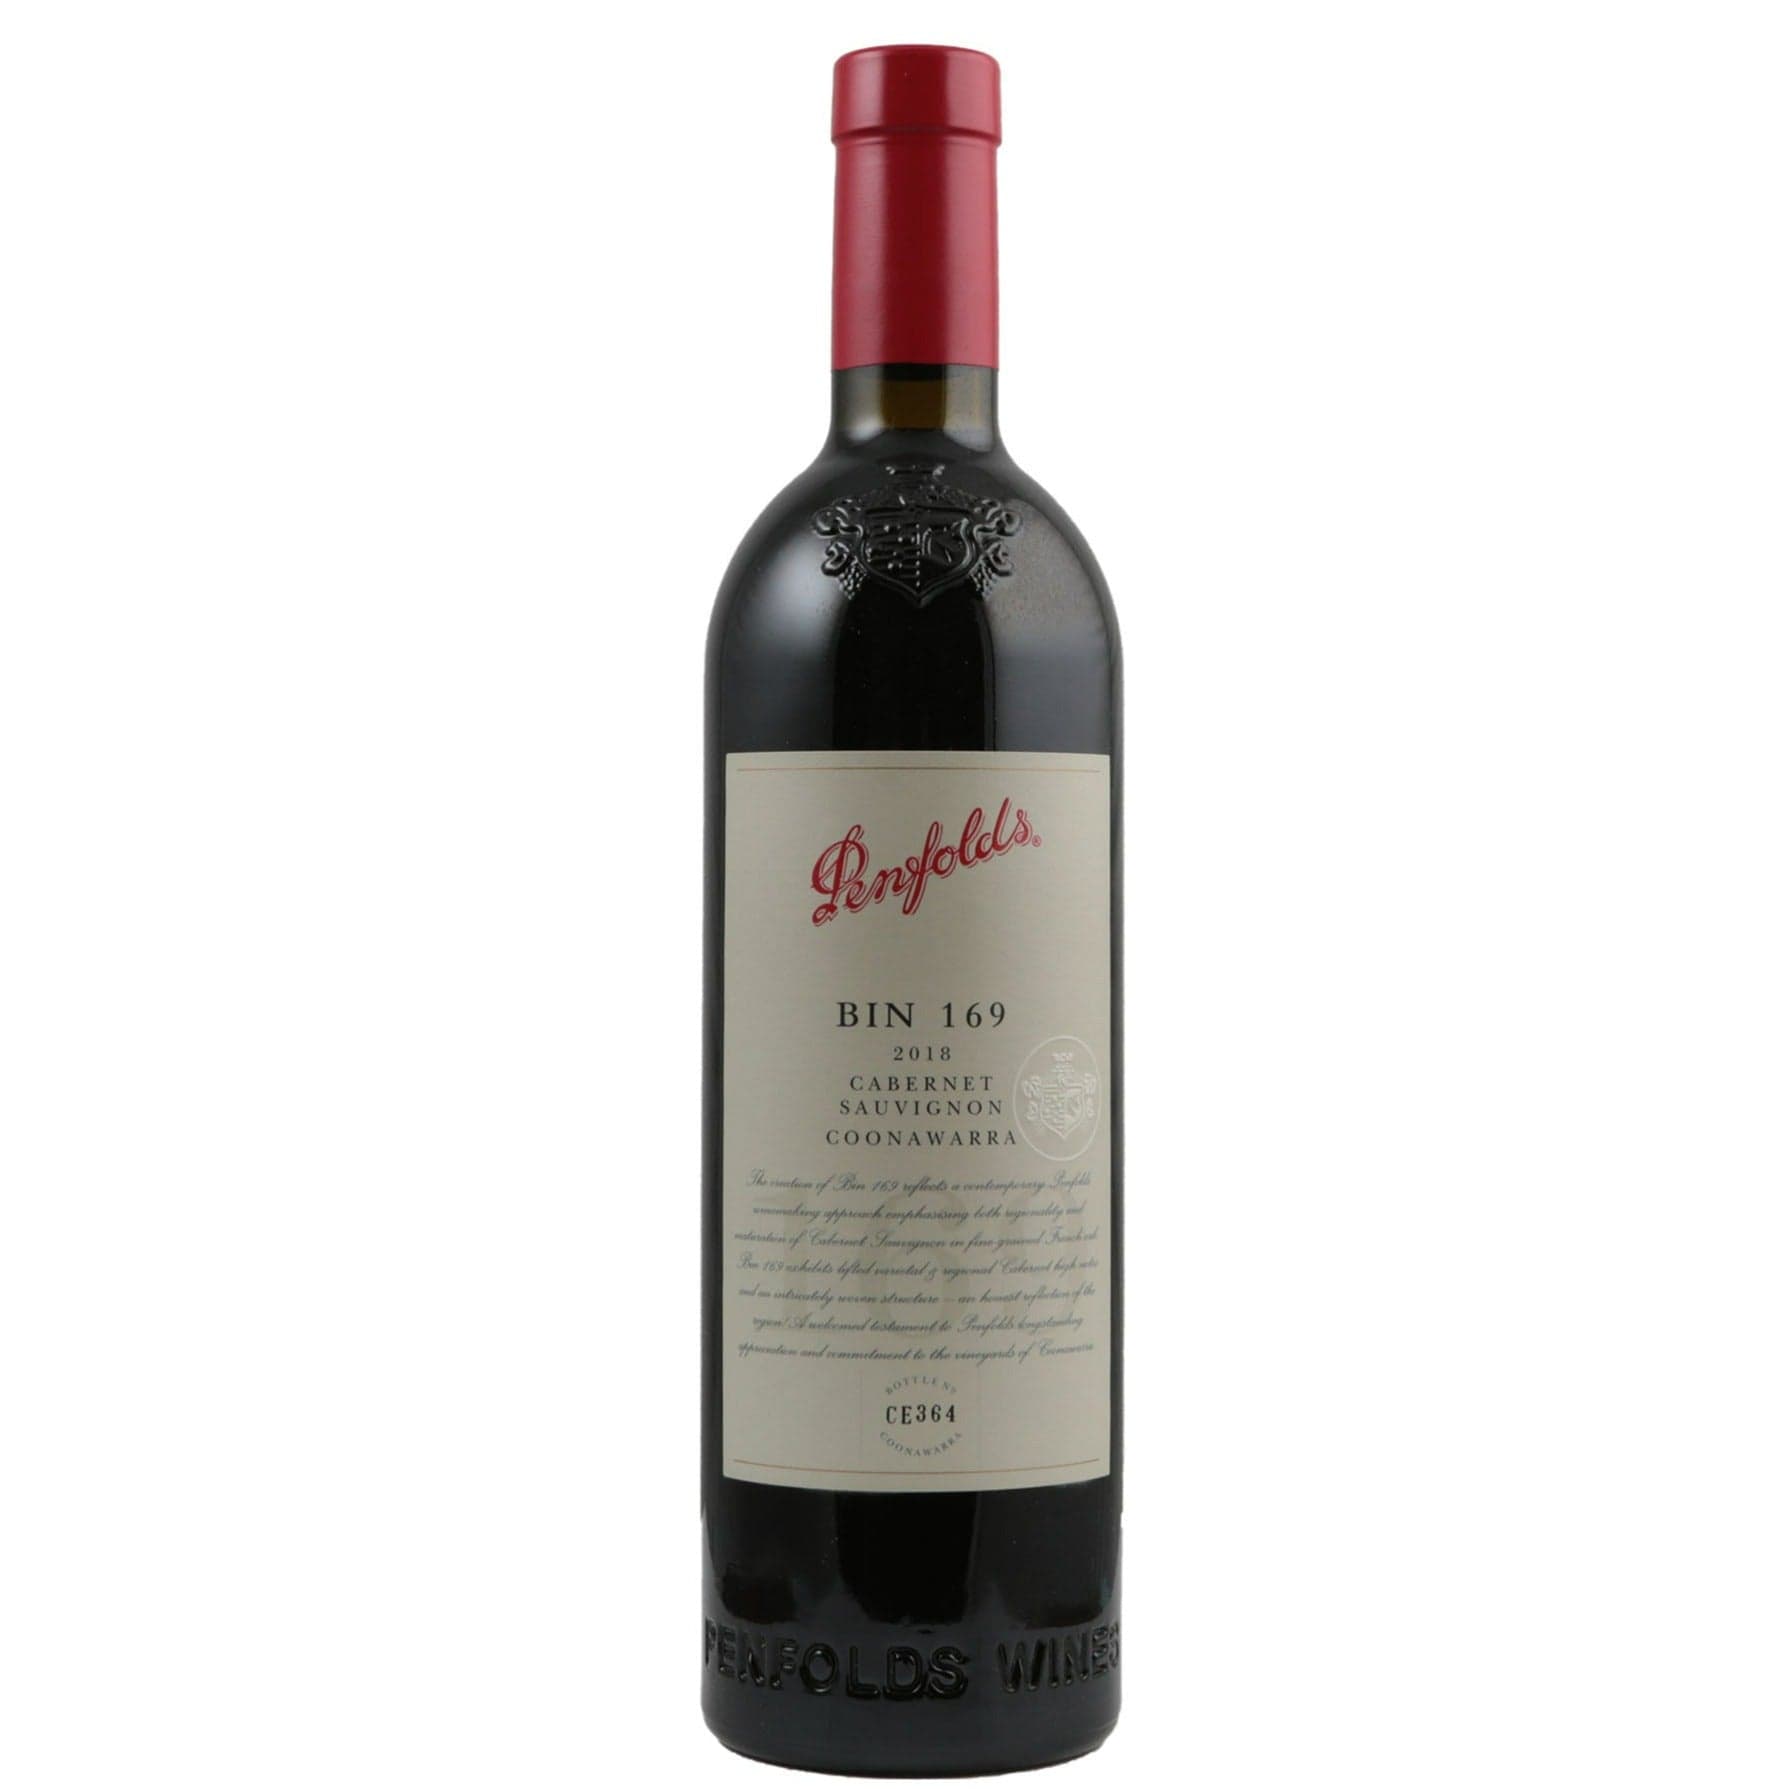 Single bottle of Red wine Penfolds, Bin 169 Cabernet Sauvignon, Coonawarra S.A., 2018 100% Cabernet Sauvignon